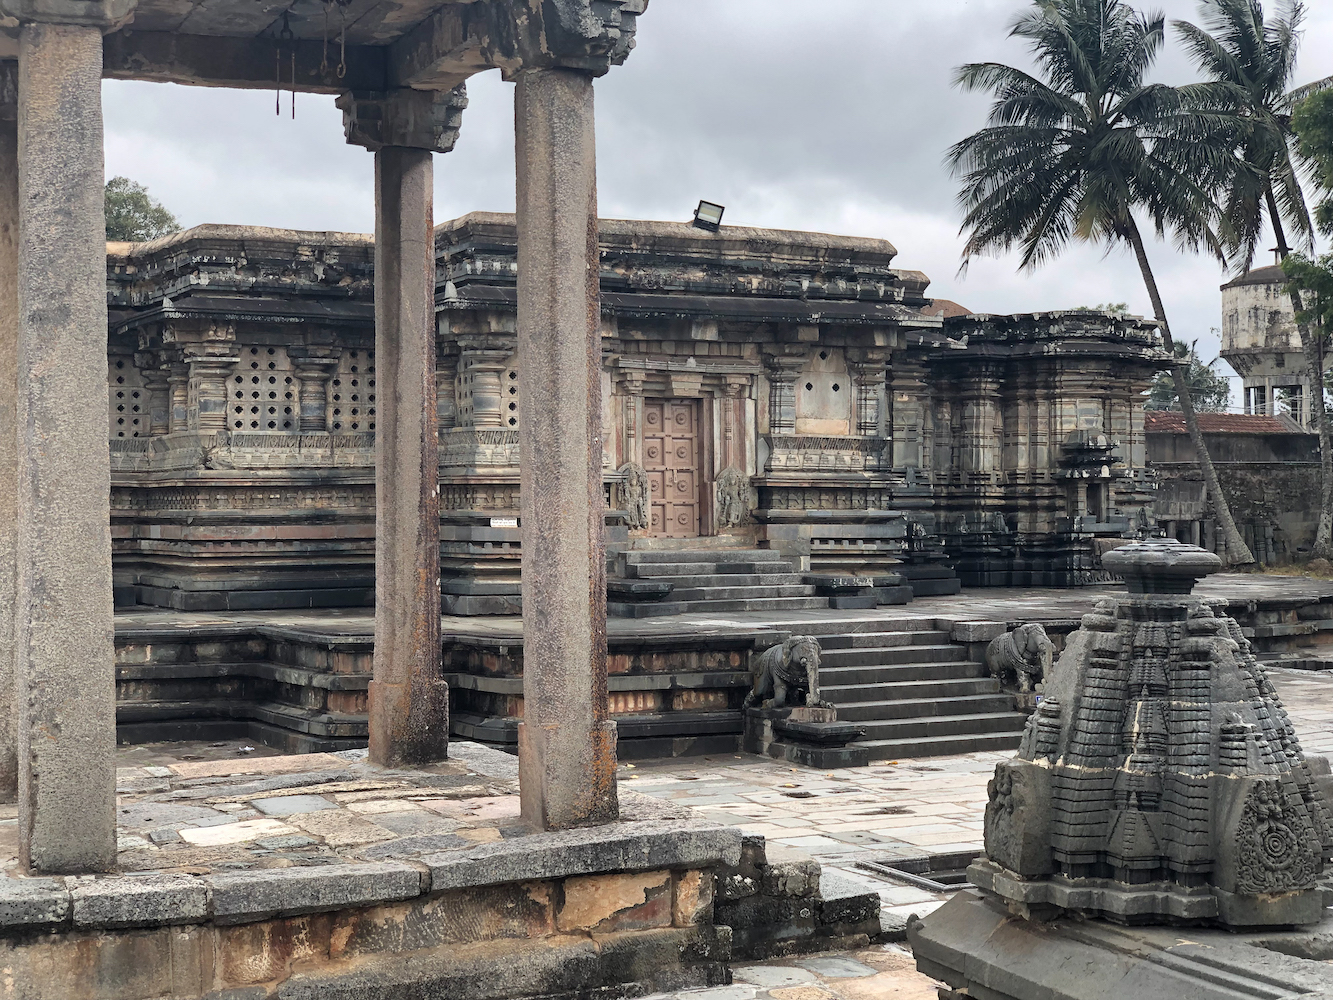 Hoysala architecture in the Chennakeshava Temple in Belur, Karnataka, India.